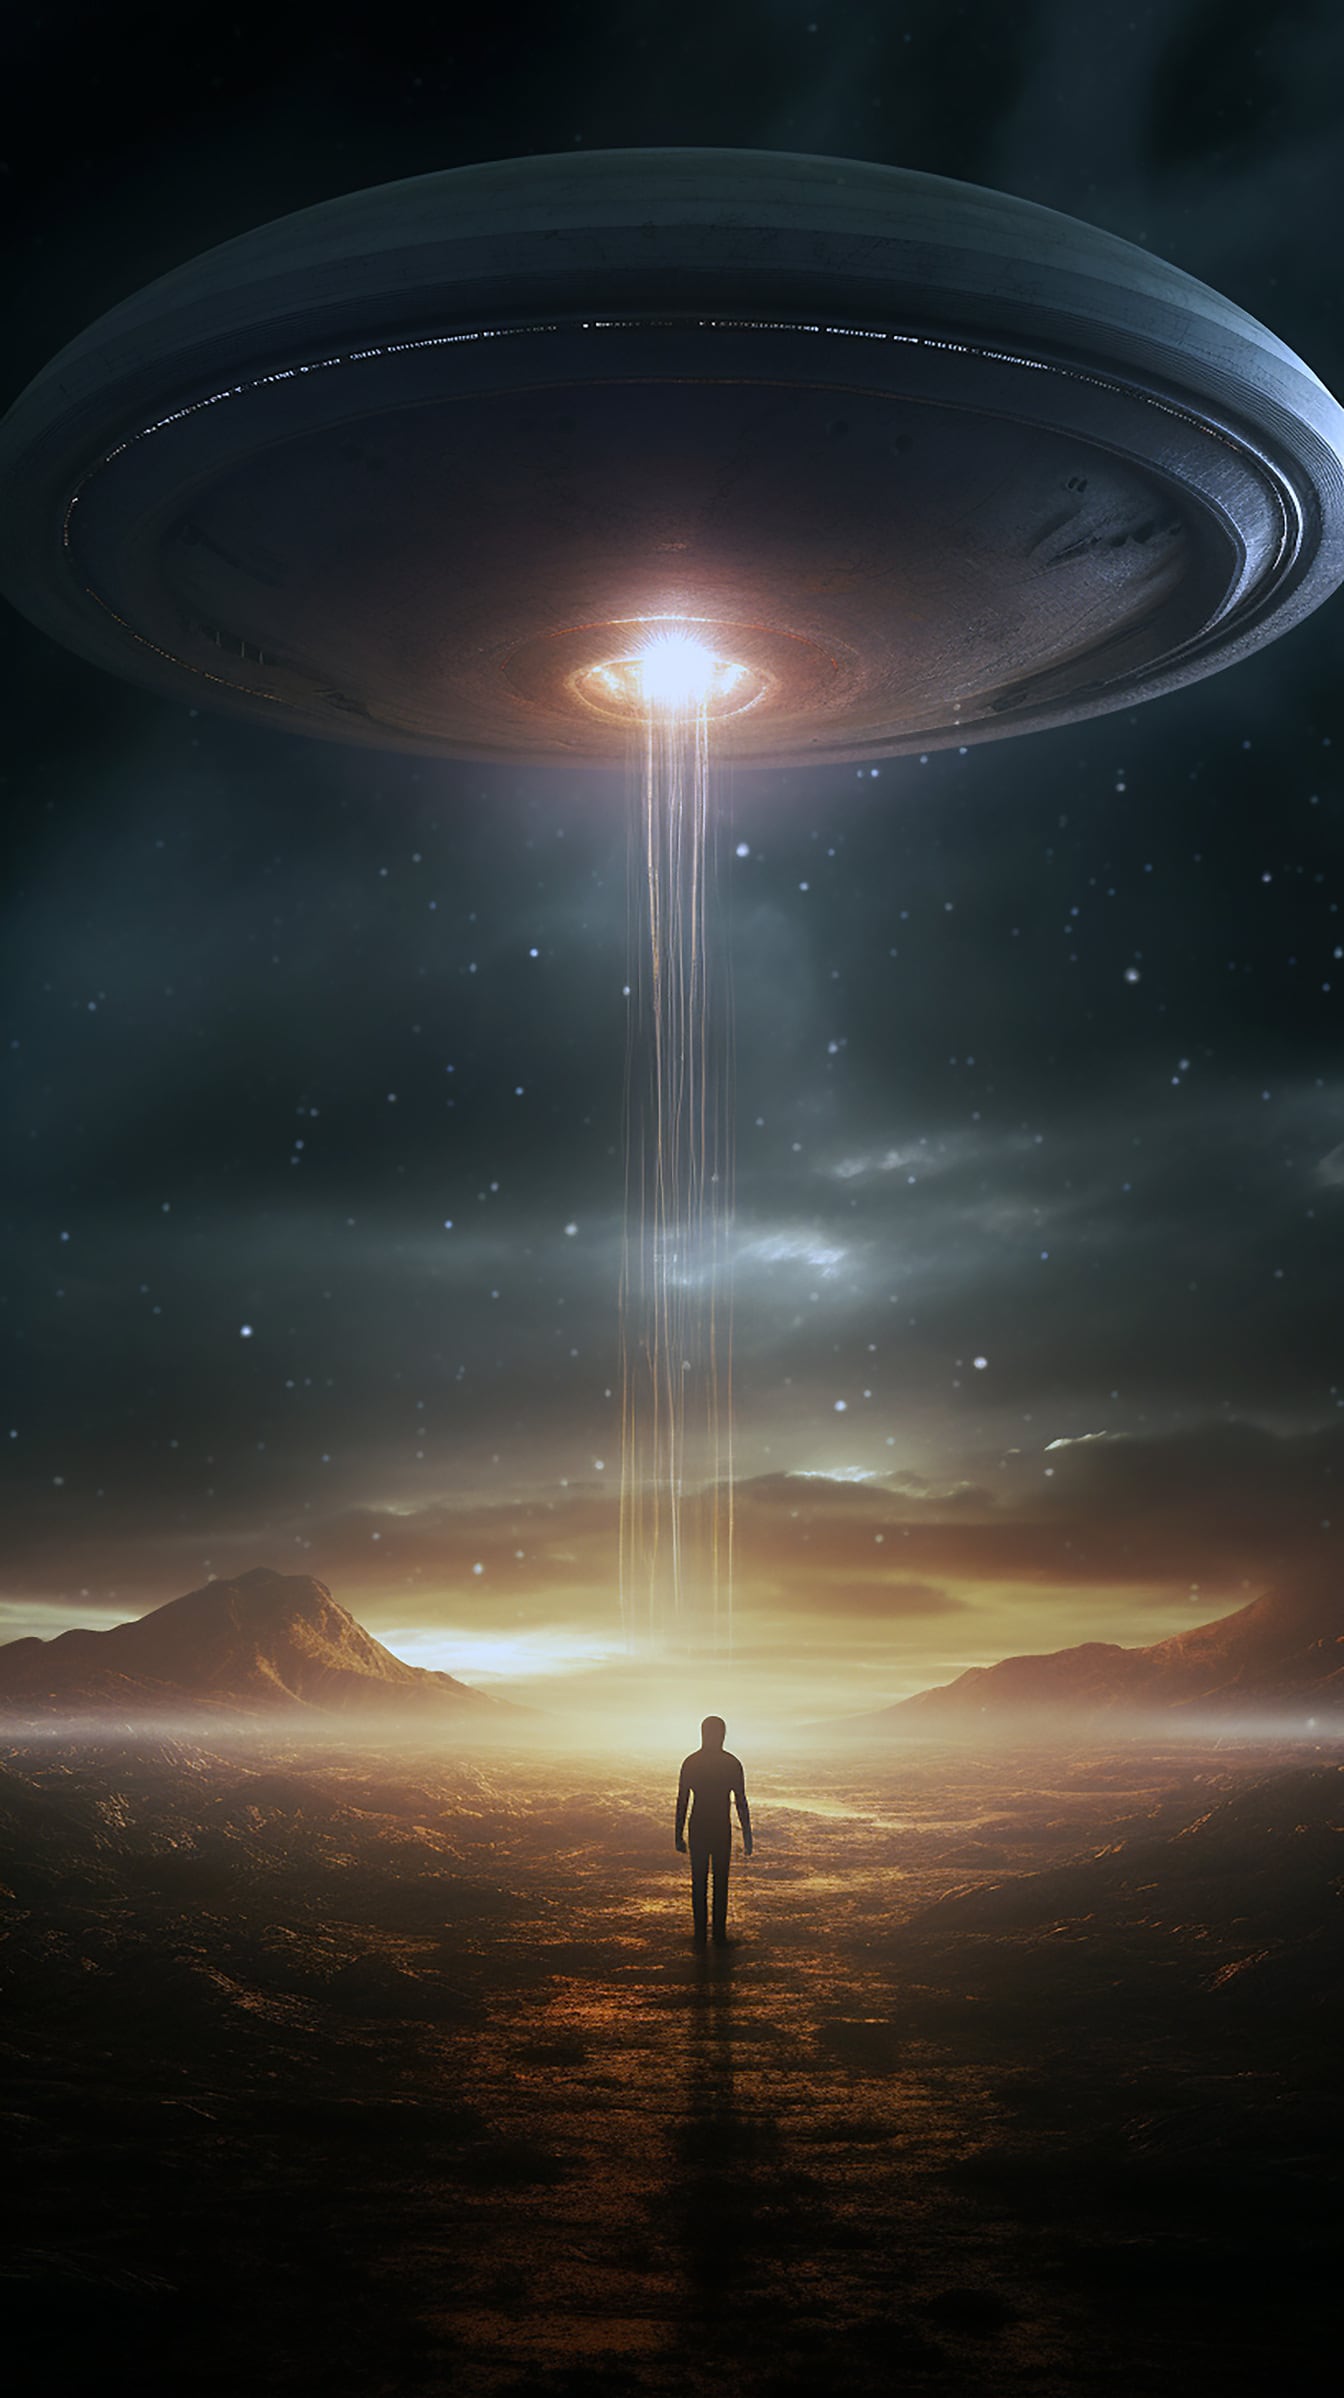 Alien spacecraft abduction horror fantasy illustration